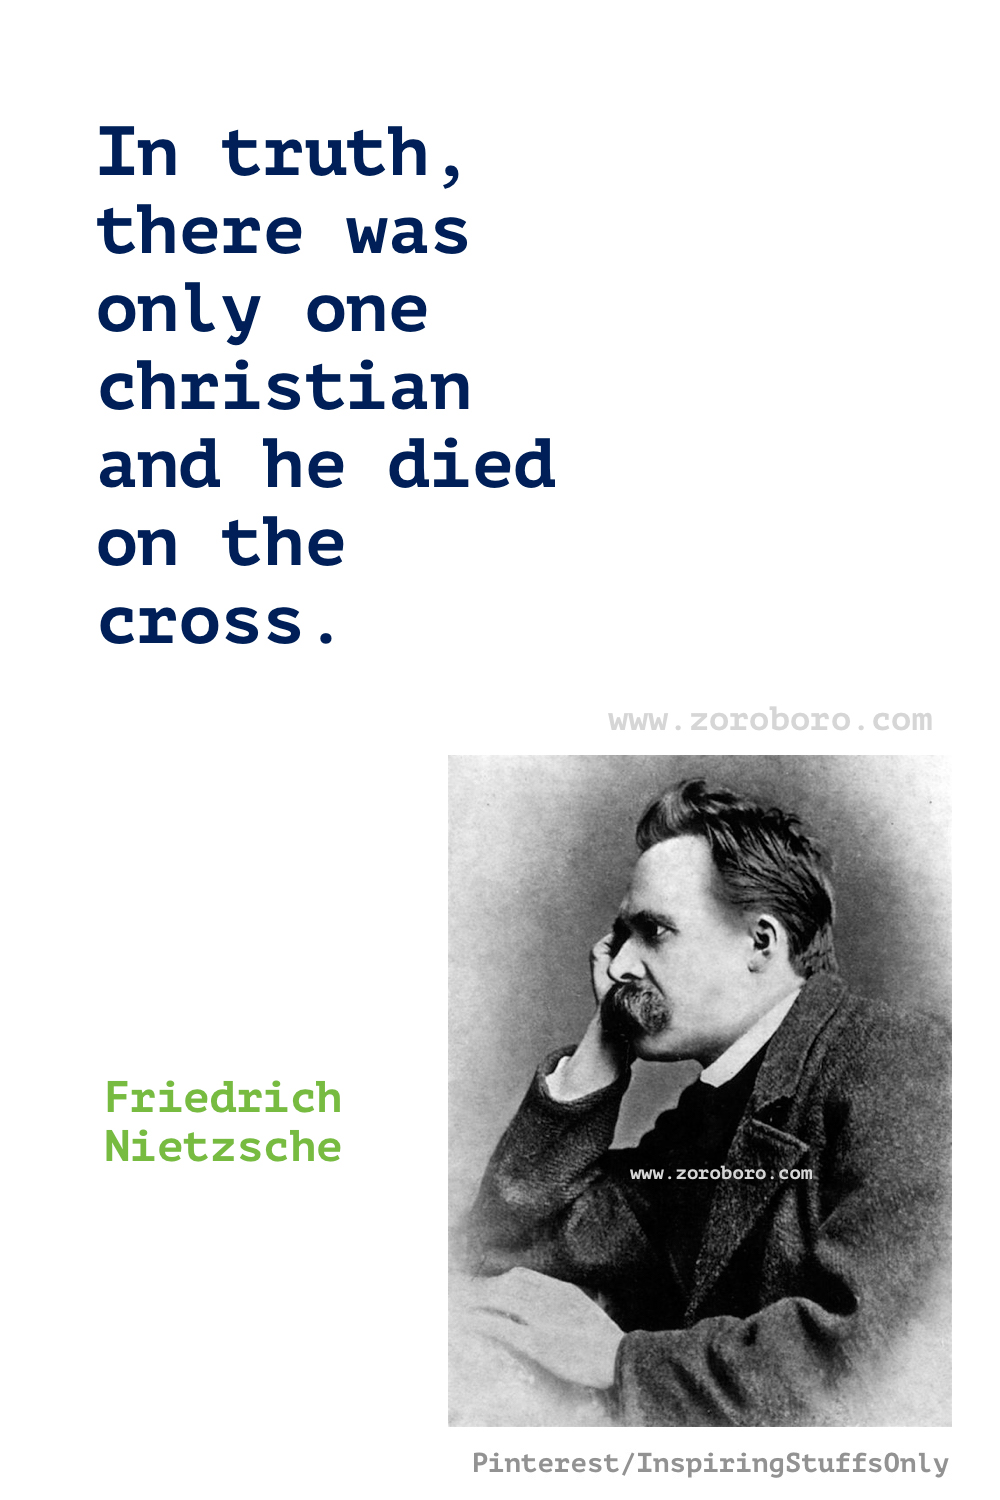 Friedrich Nietzsche Quotes. Friedrich Nietzsche Philosophy, Friedrich Nietzsche Books Quotes, Friedrich Nietzsche - Thus Spoke Zarathustra Quotes. Friedrich Nietzsche